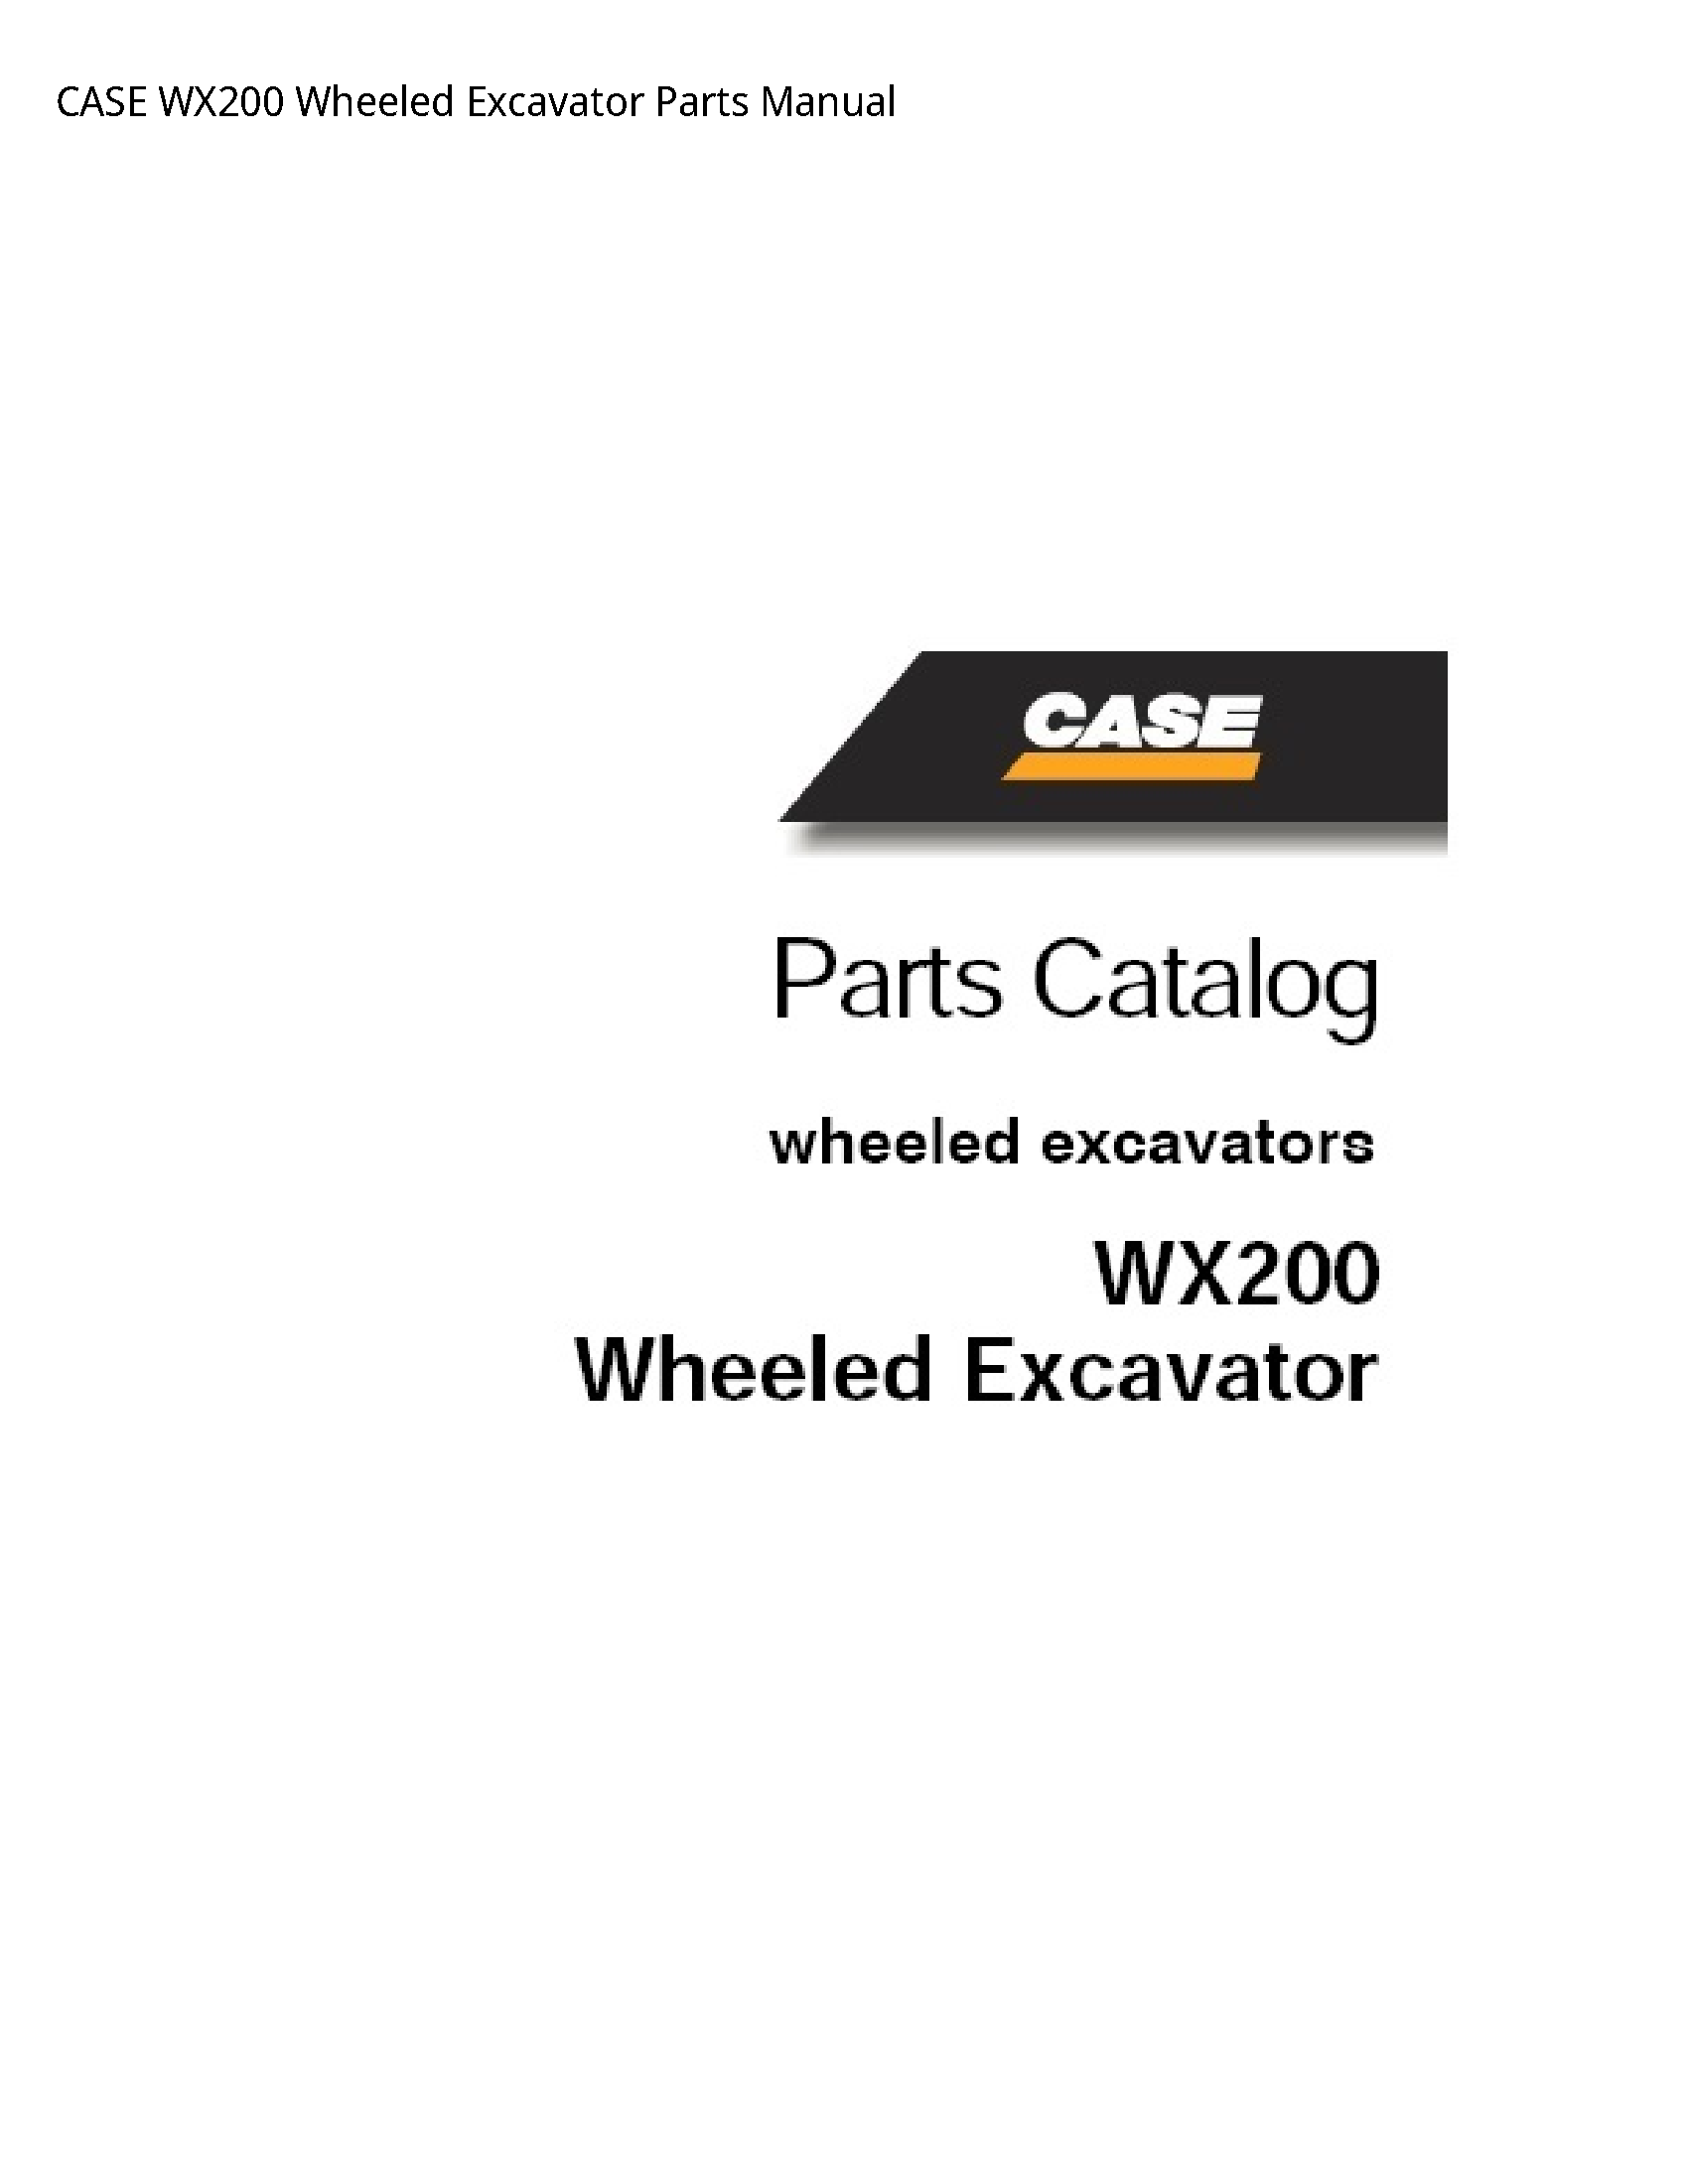 Case/Case IH WX200 Wheeled Excavator Parts manual